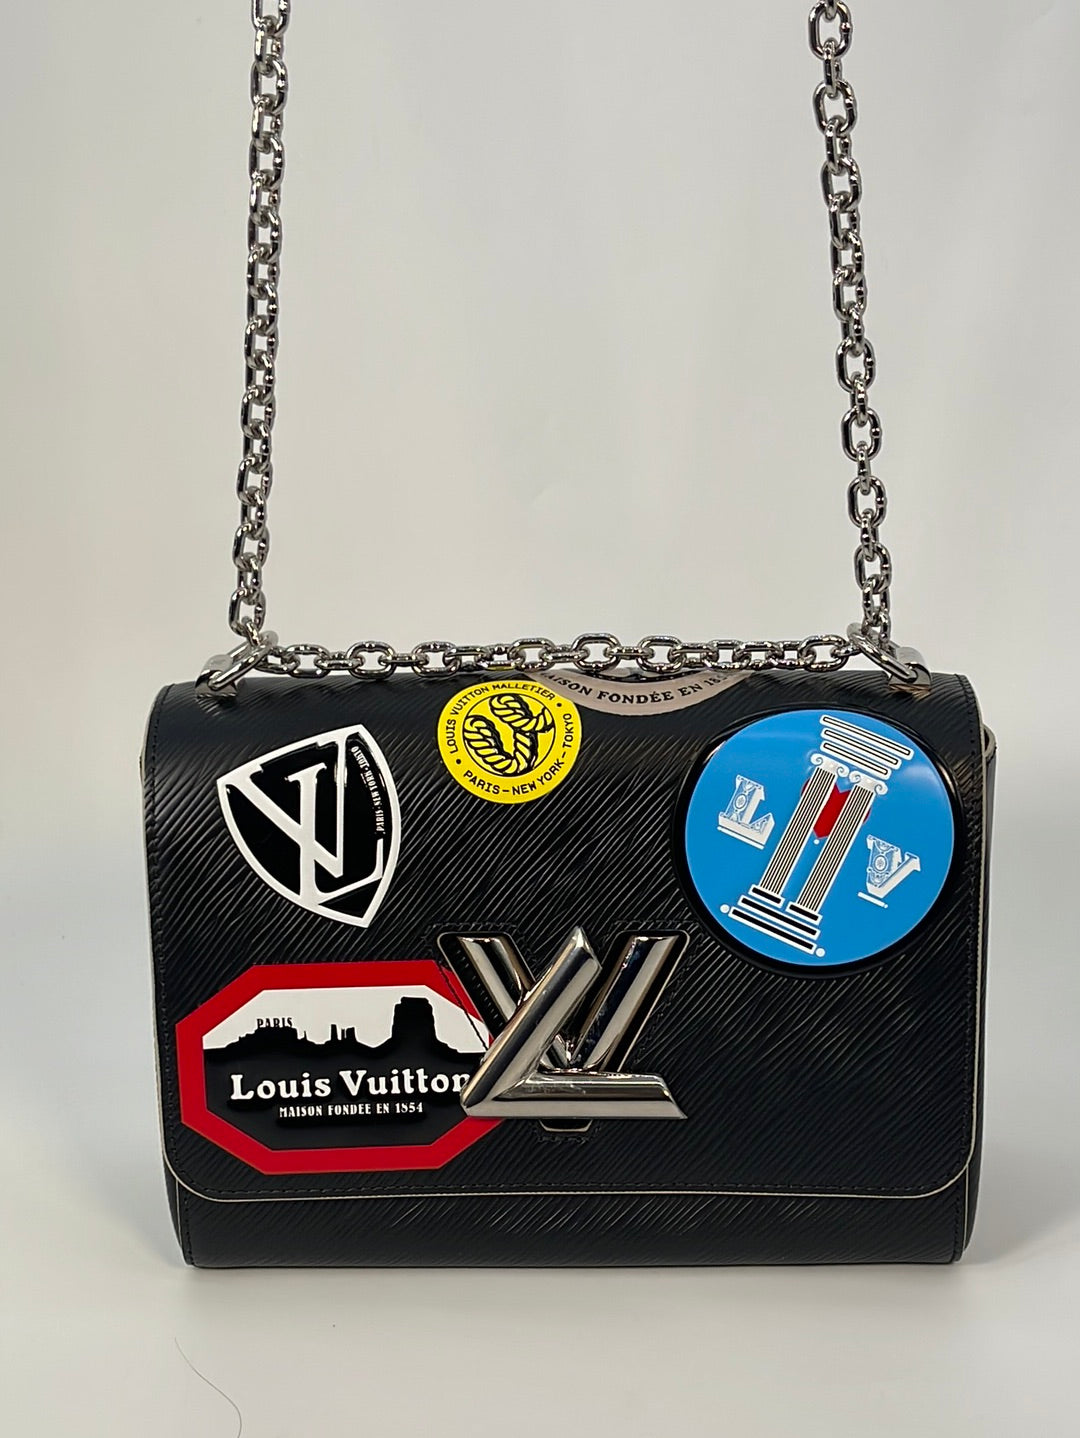 Louis Vuitton Limited Edition Twist Bag